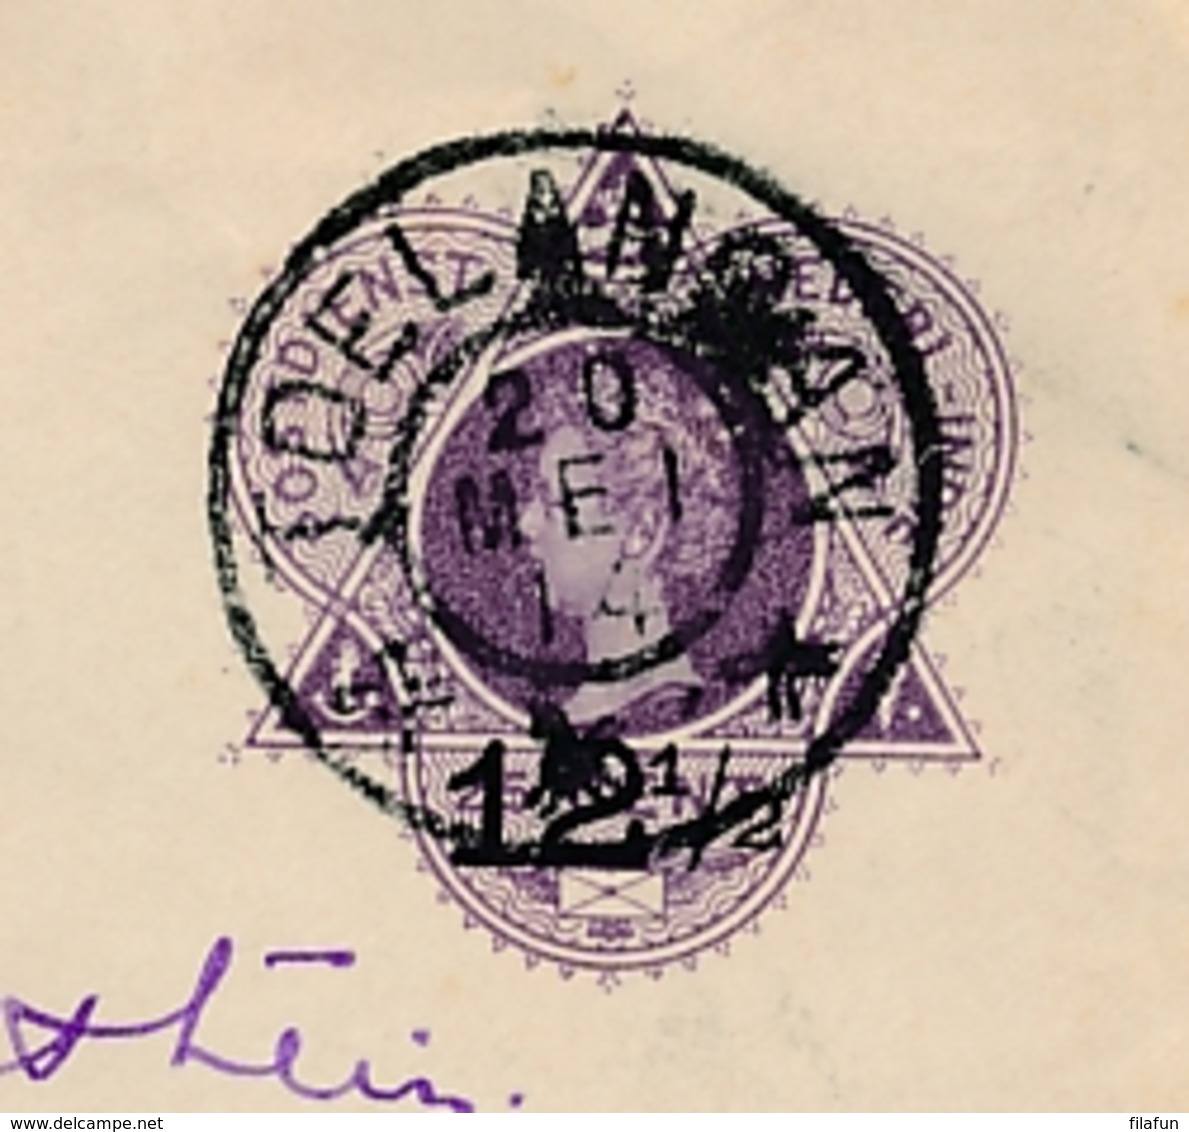 Nederlands Indië - 1914 - 12,5 Cent Envelop Van Grootrond GR TOELANGAN Naar Haarlem / Nederland - Niederländisch-Indien